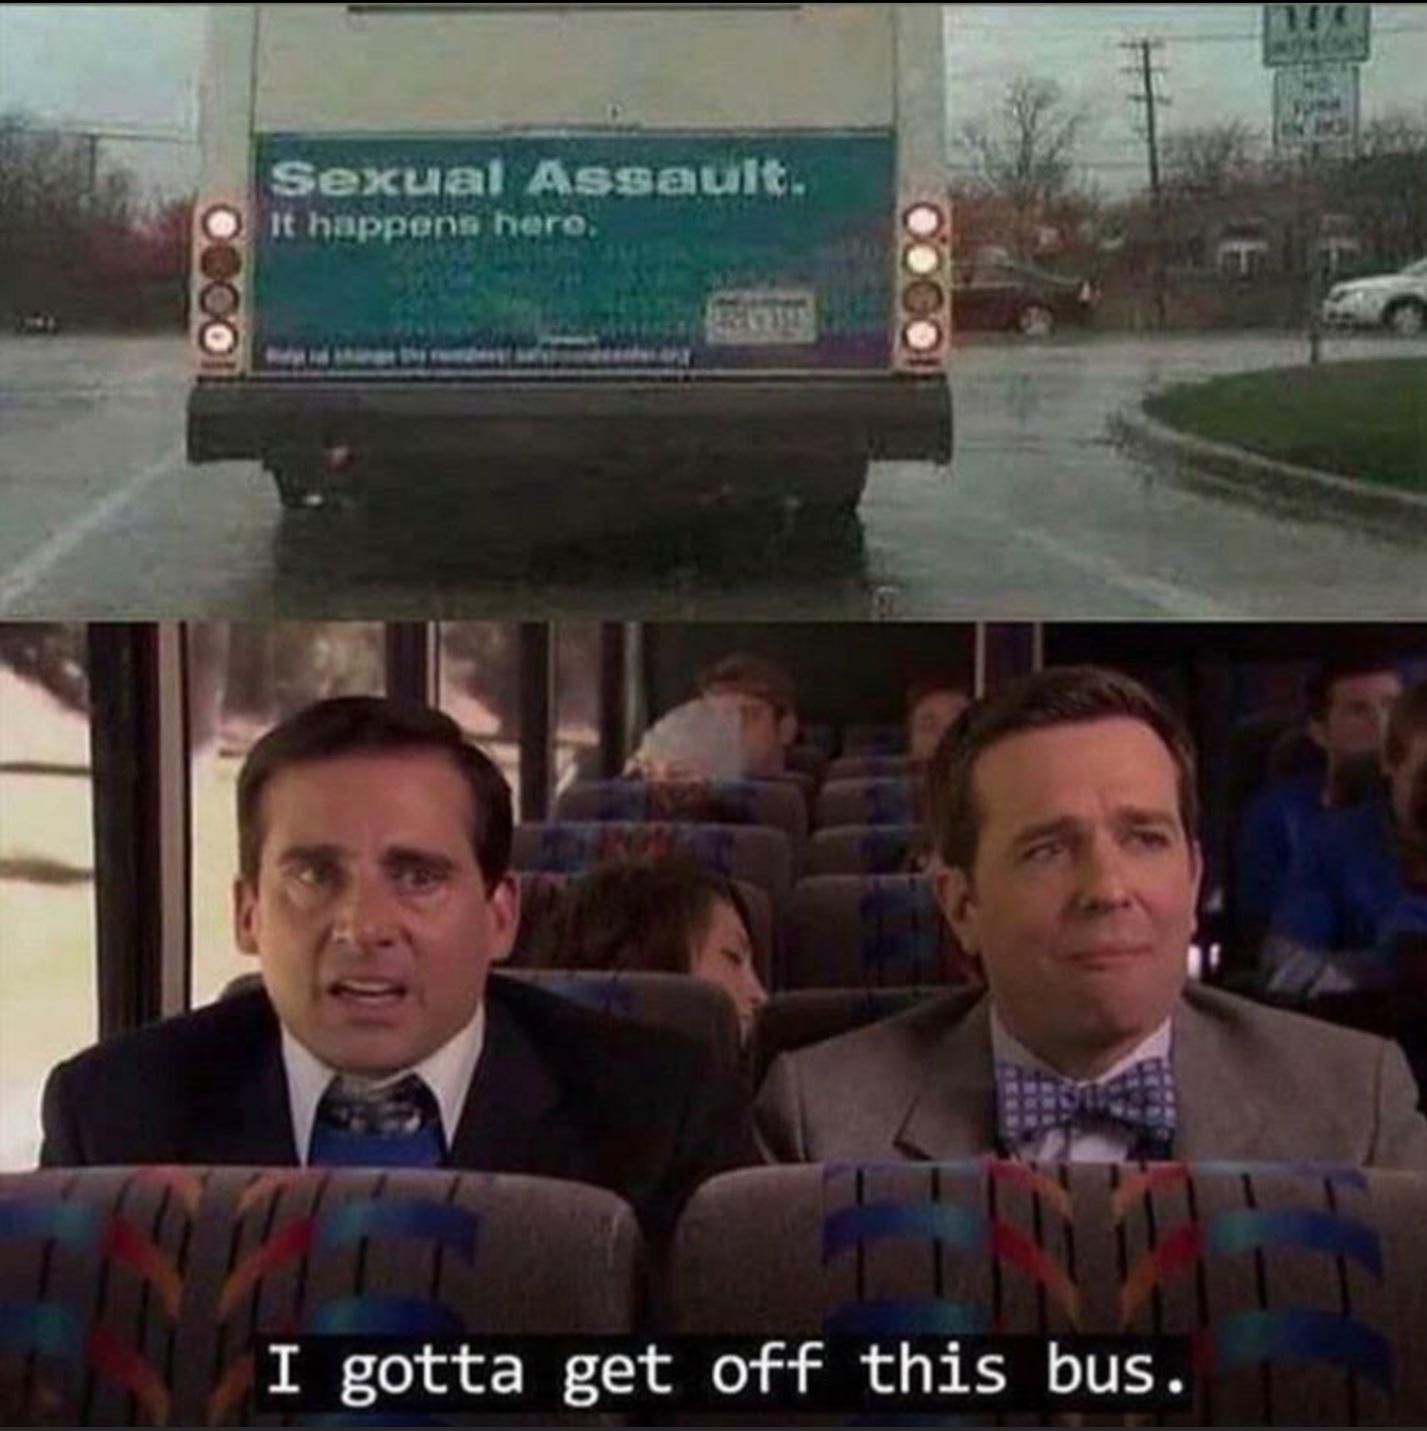 Oops wrong bus, sorry.....